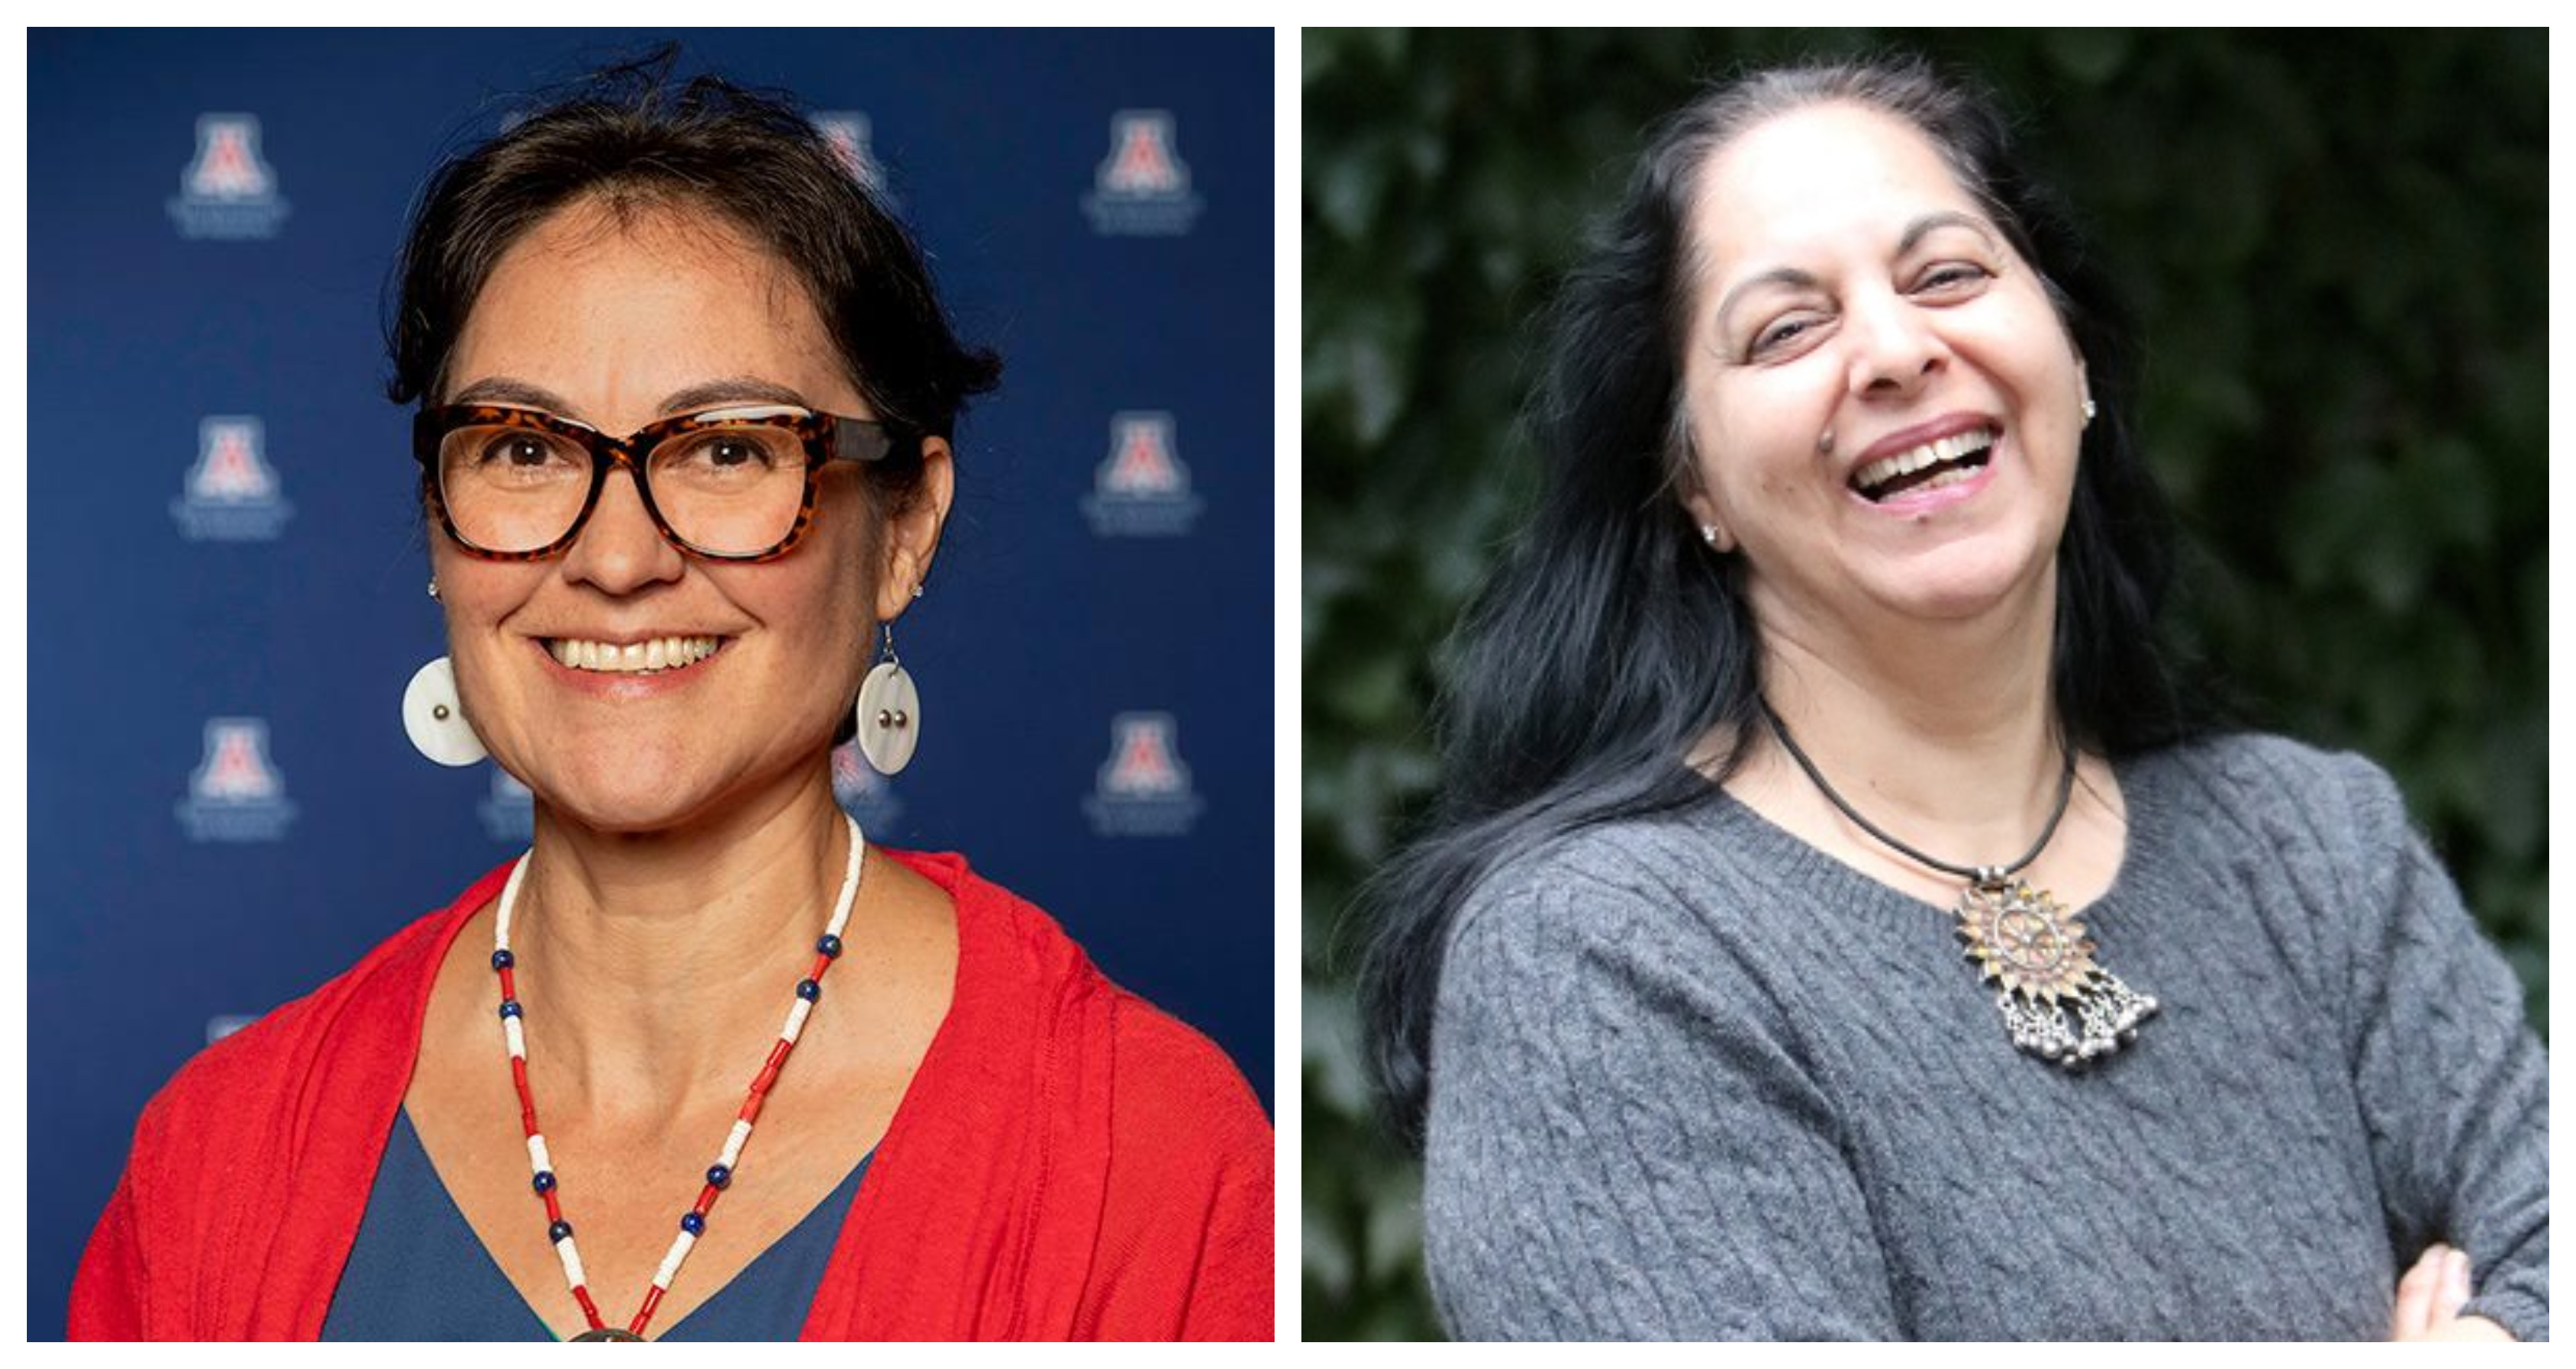 Headshots of Shelly Lowe (on the left) and Geeta Pradhan